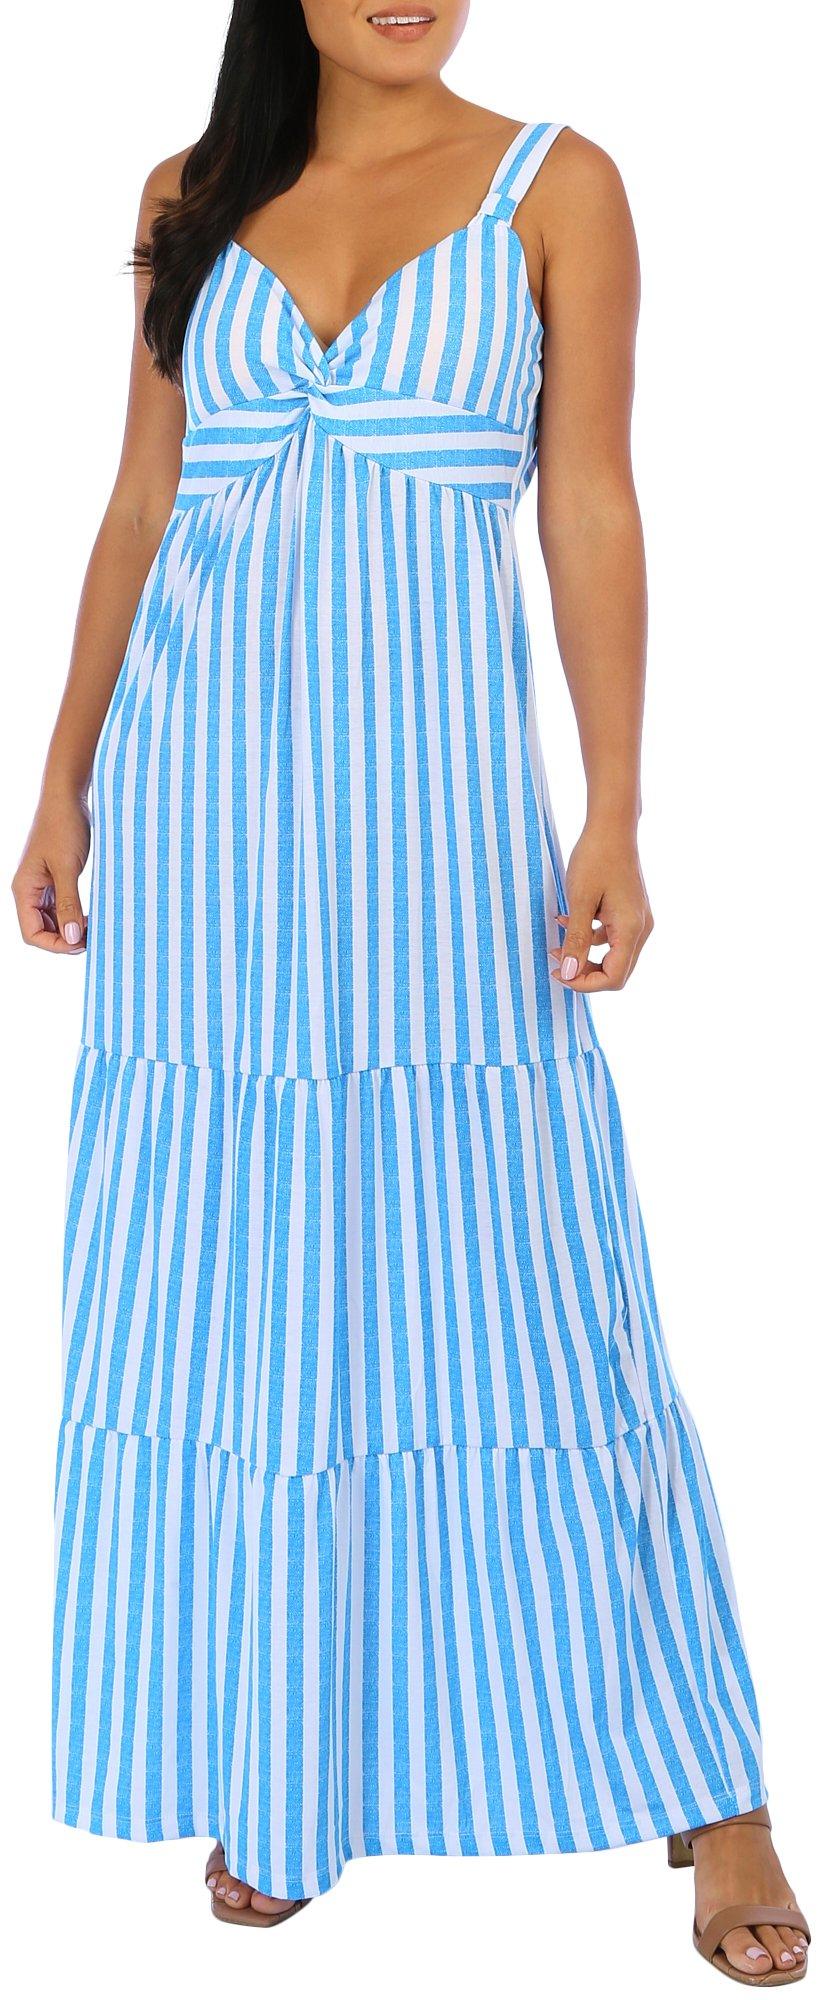 Womens Striped Twist Front Sleevless Dress